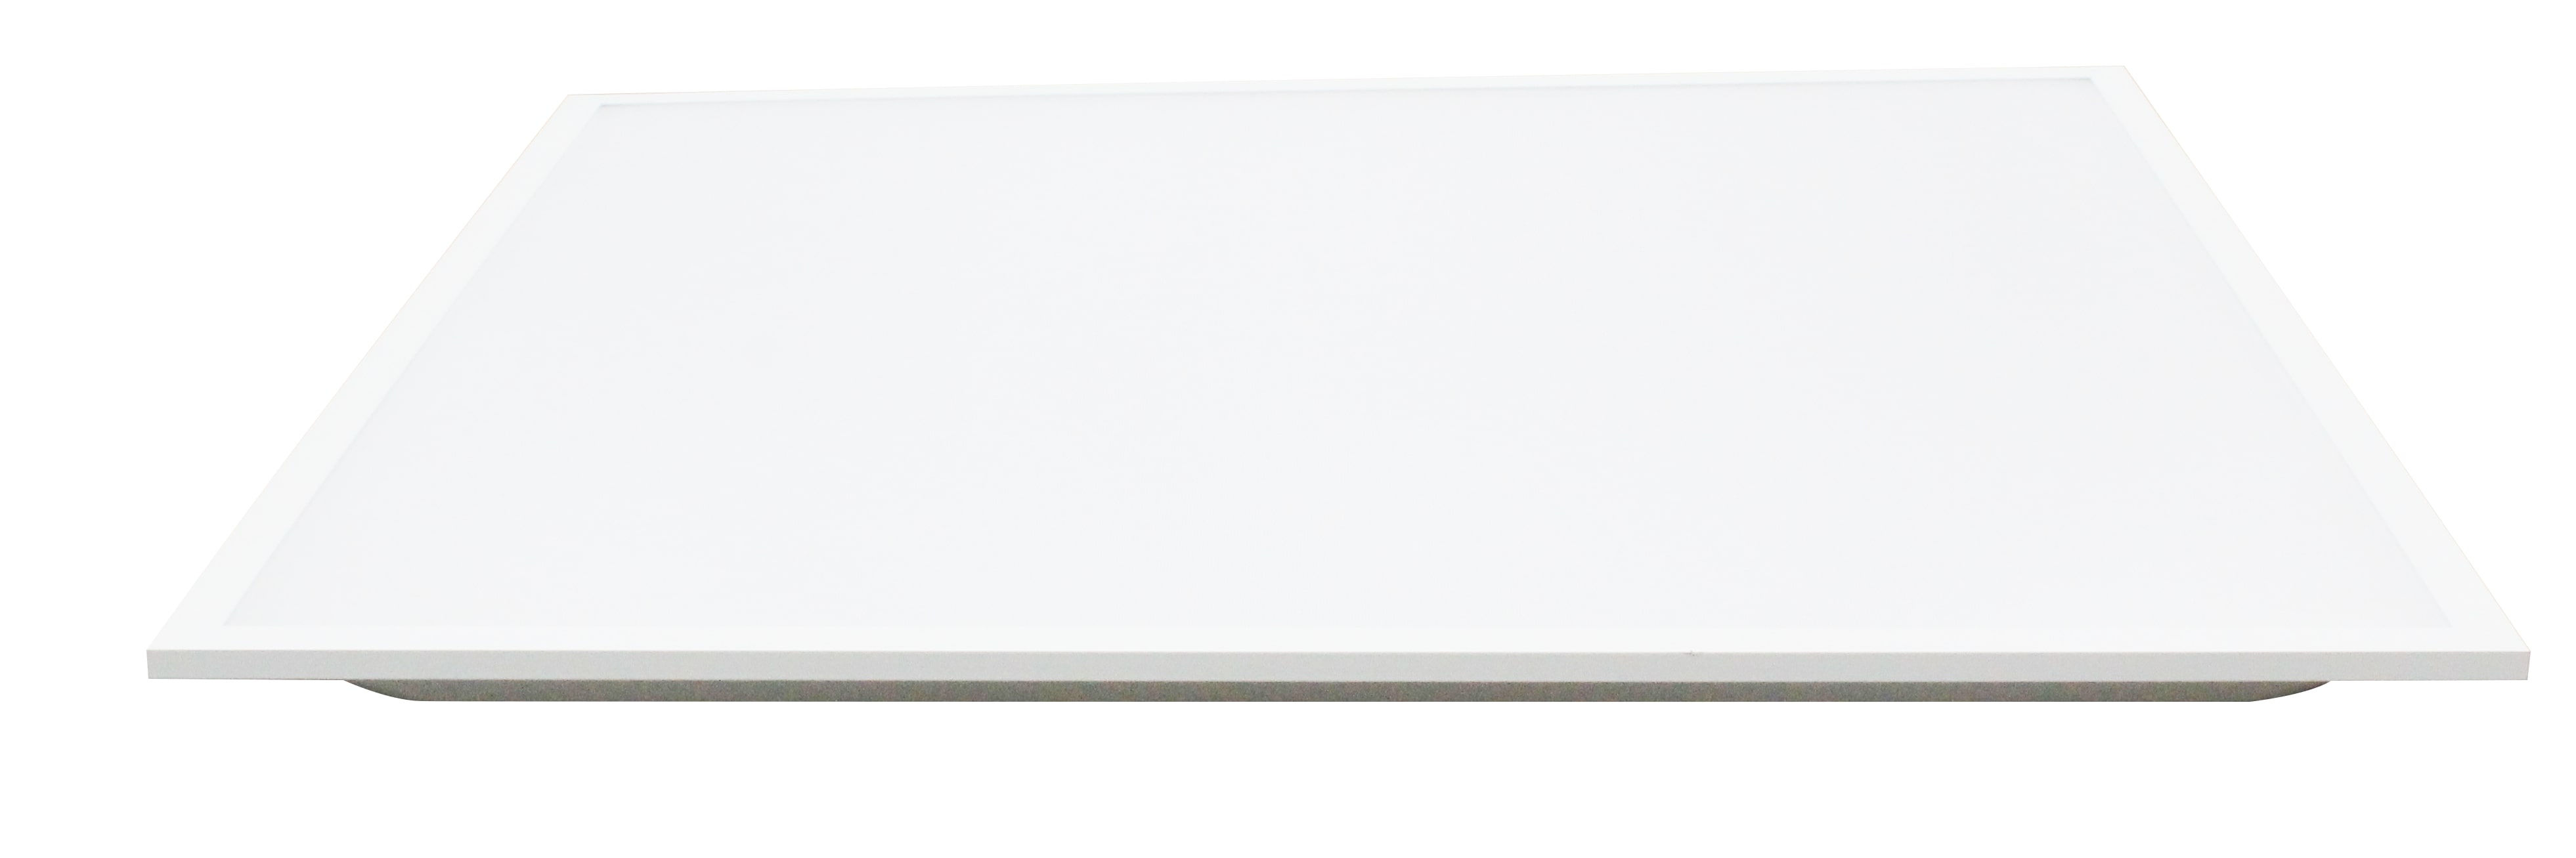 LED-Panel BACKLIGHT BASELine, 35 W, 4.200 lm warmweiß, 830, 620x620 mm, 120 lm/W, nicht dimmbar